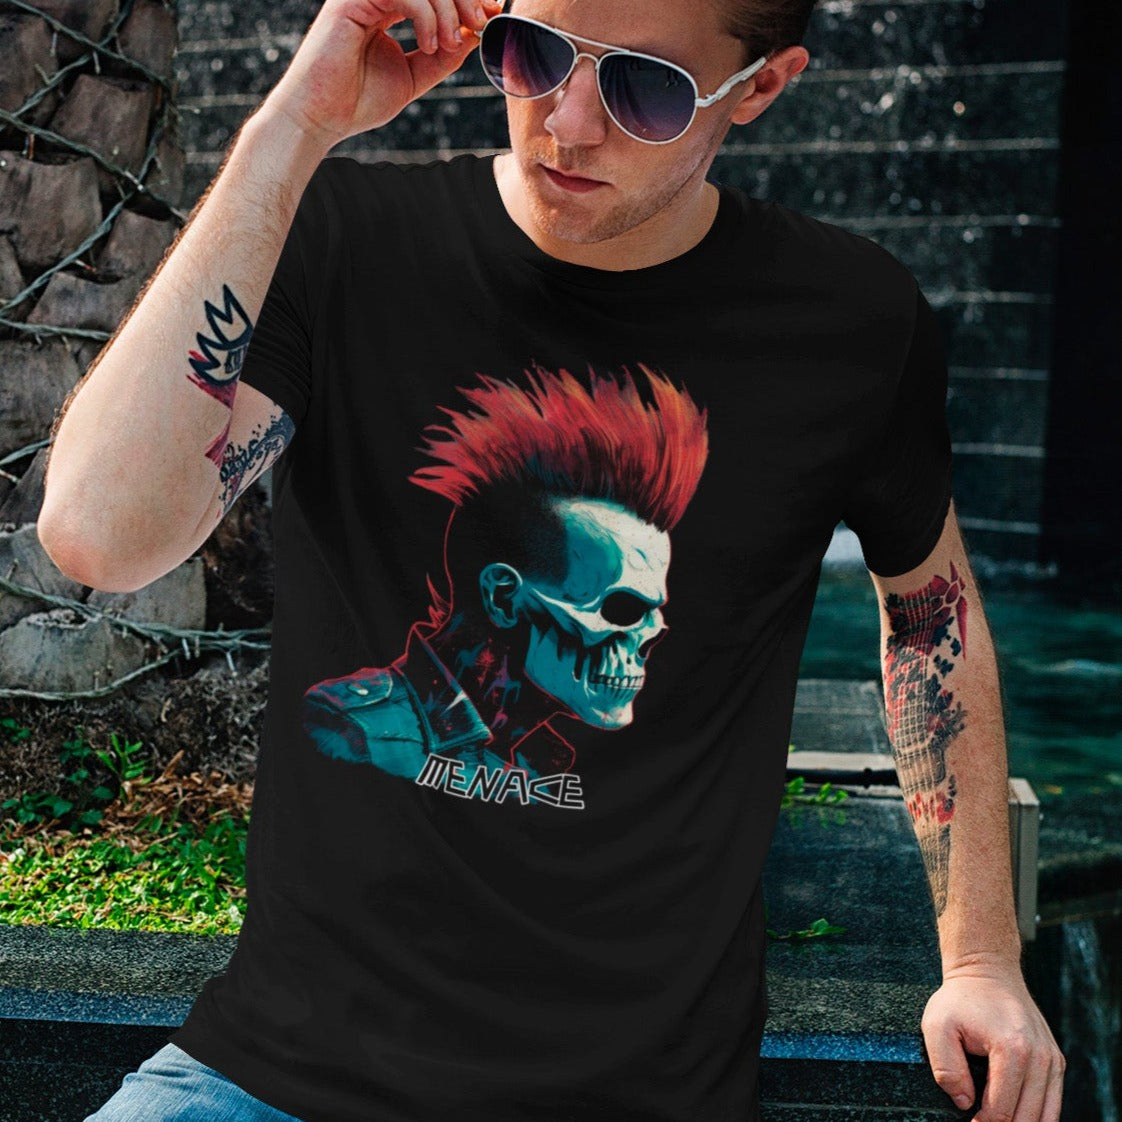 menace-punk-black-t-shirt-mockup-of-a-stylish-man-with-tattoos-wearing-a-tee